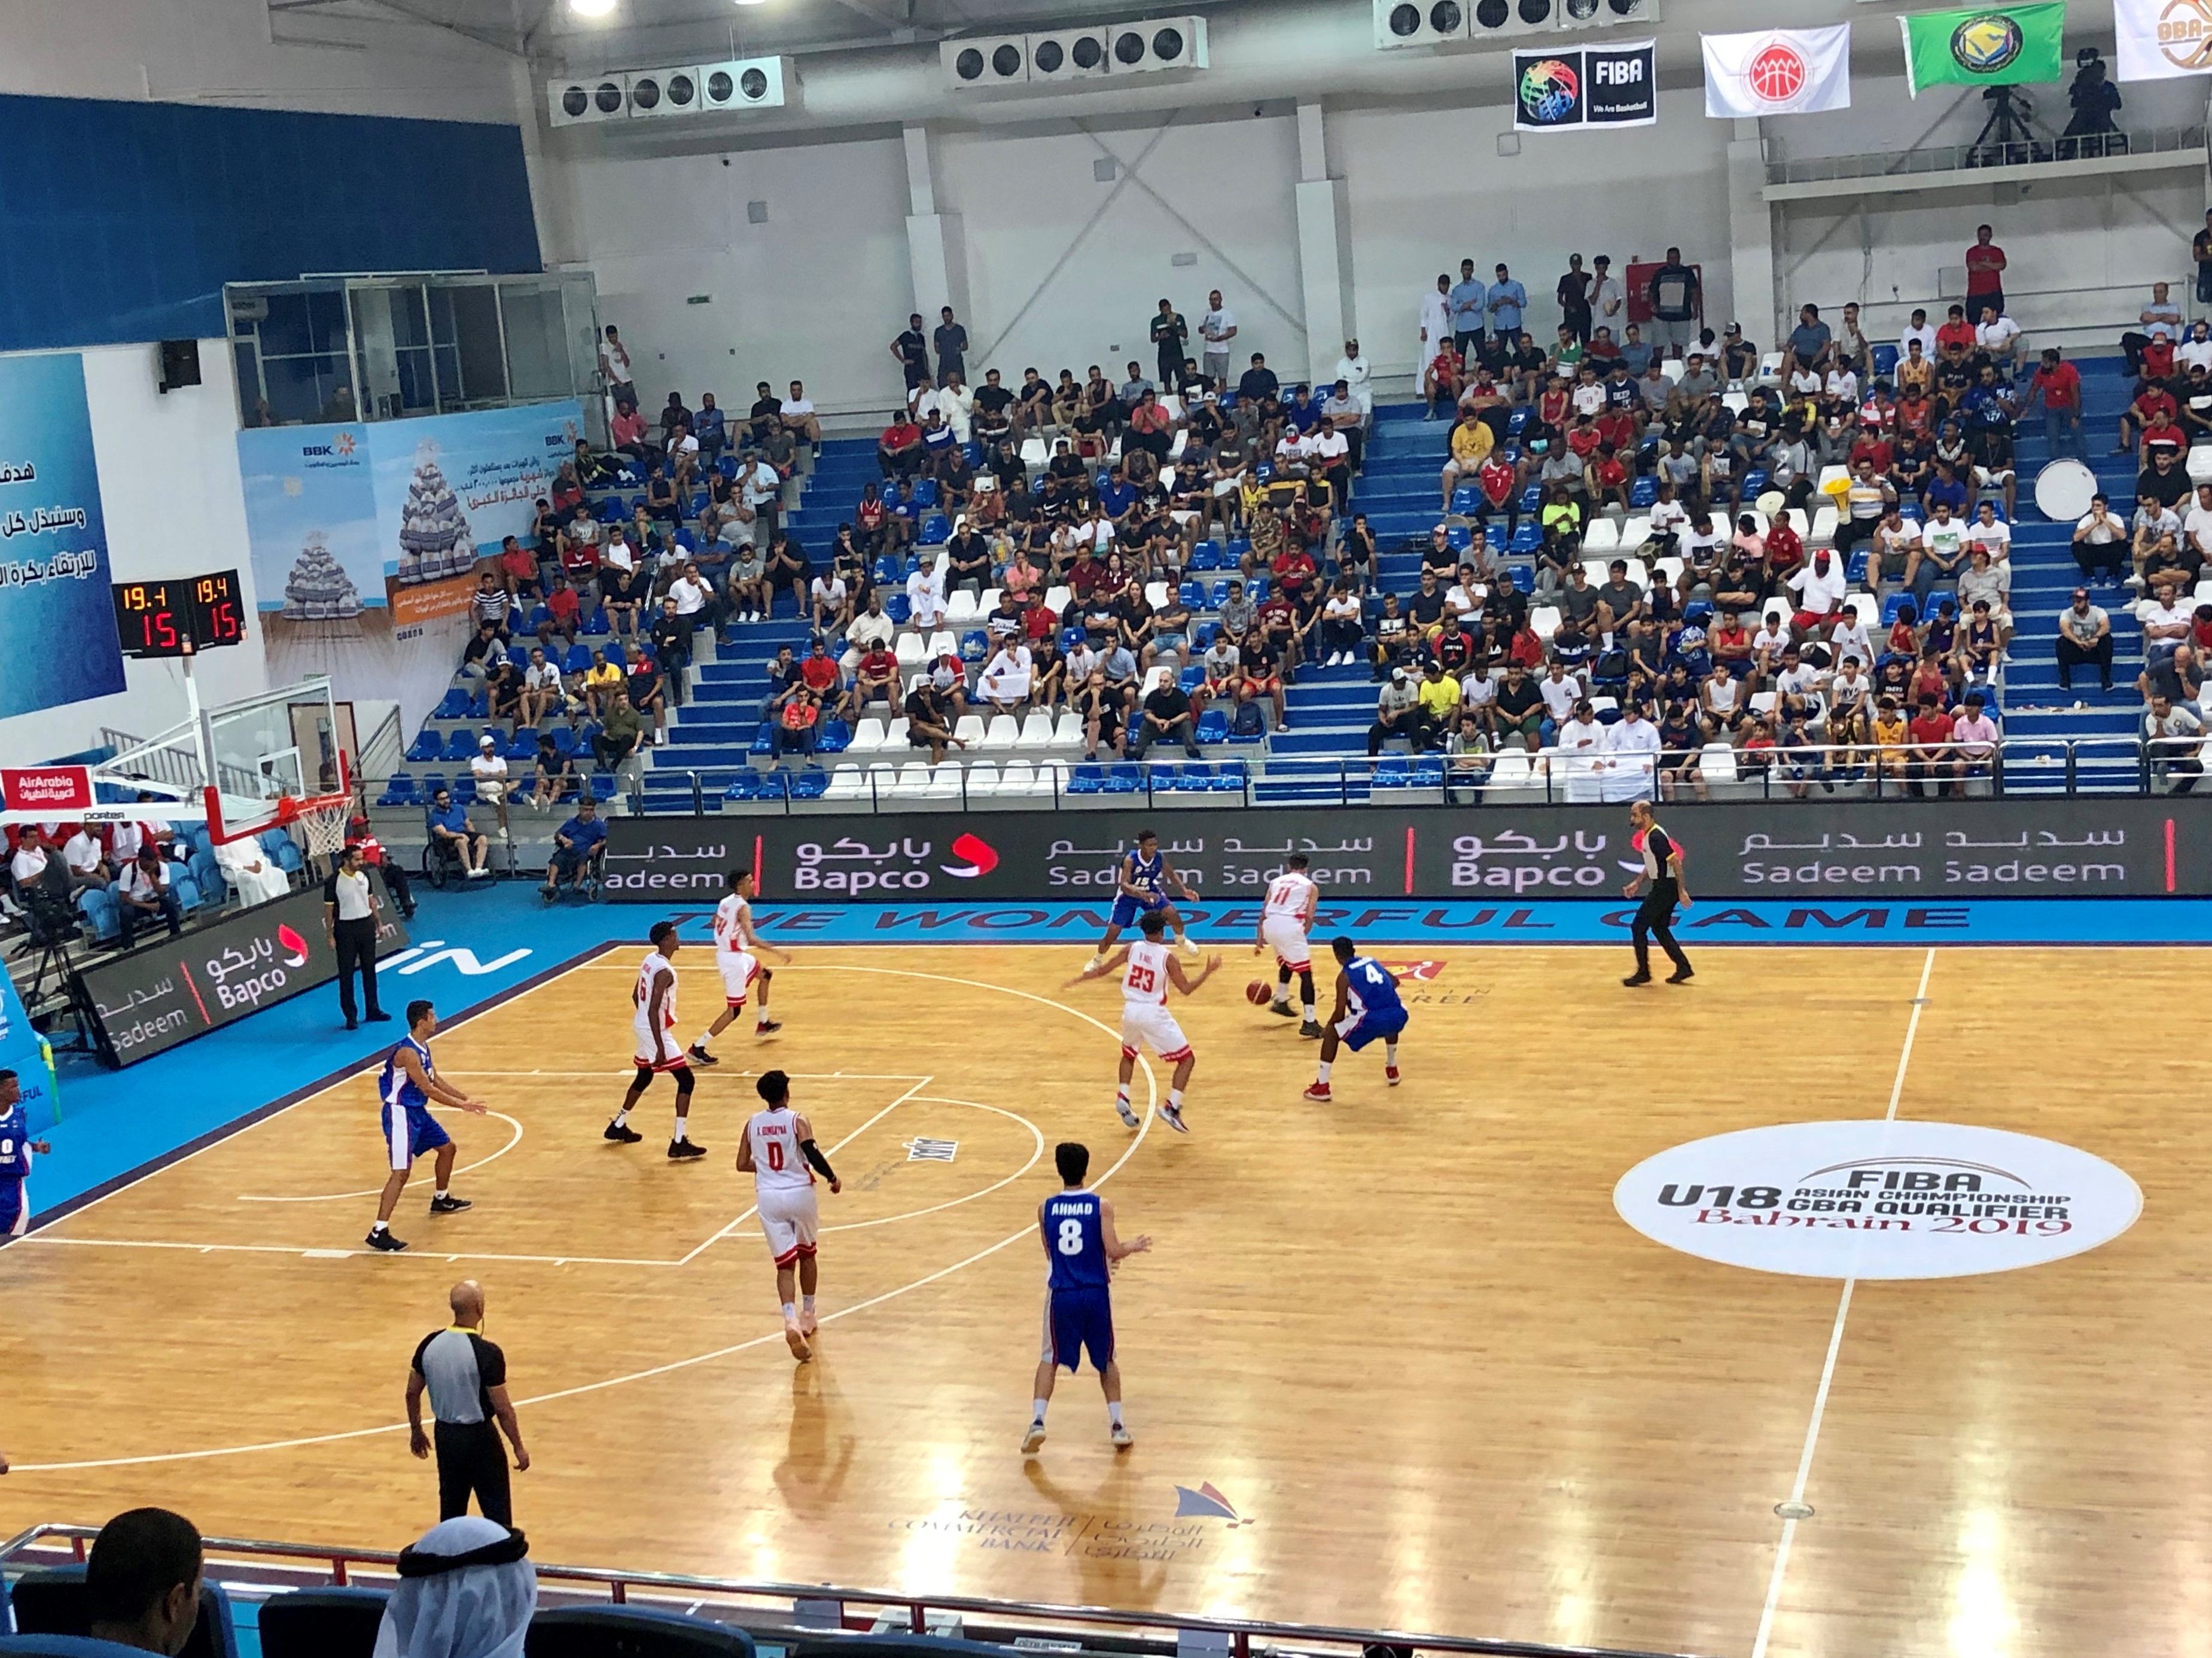 Kuwait vs Bahrain at the Gulf Cooperation Council U-18s basketball championship